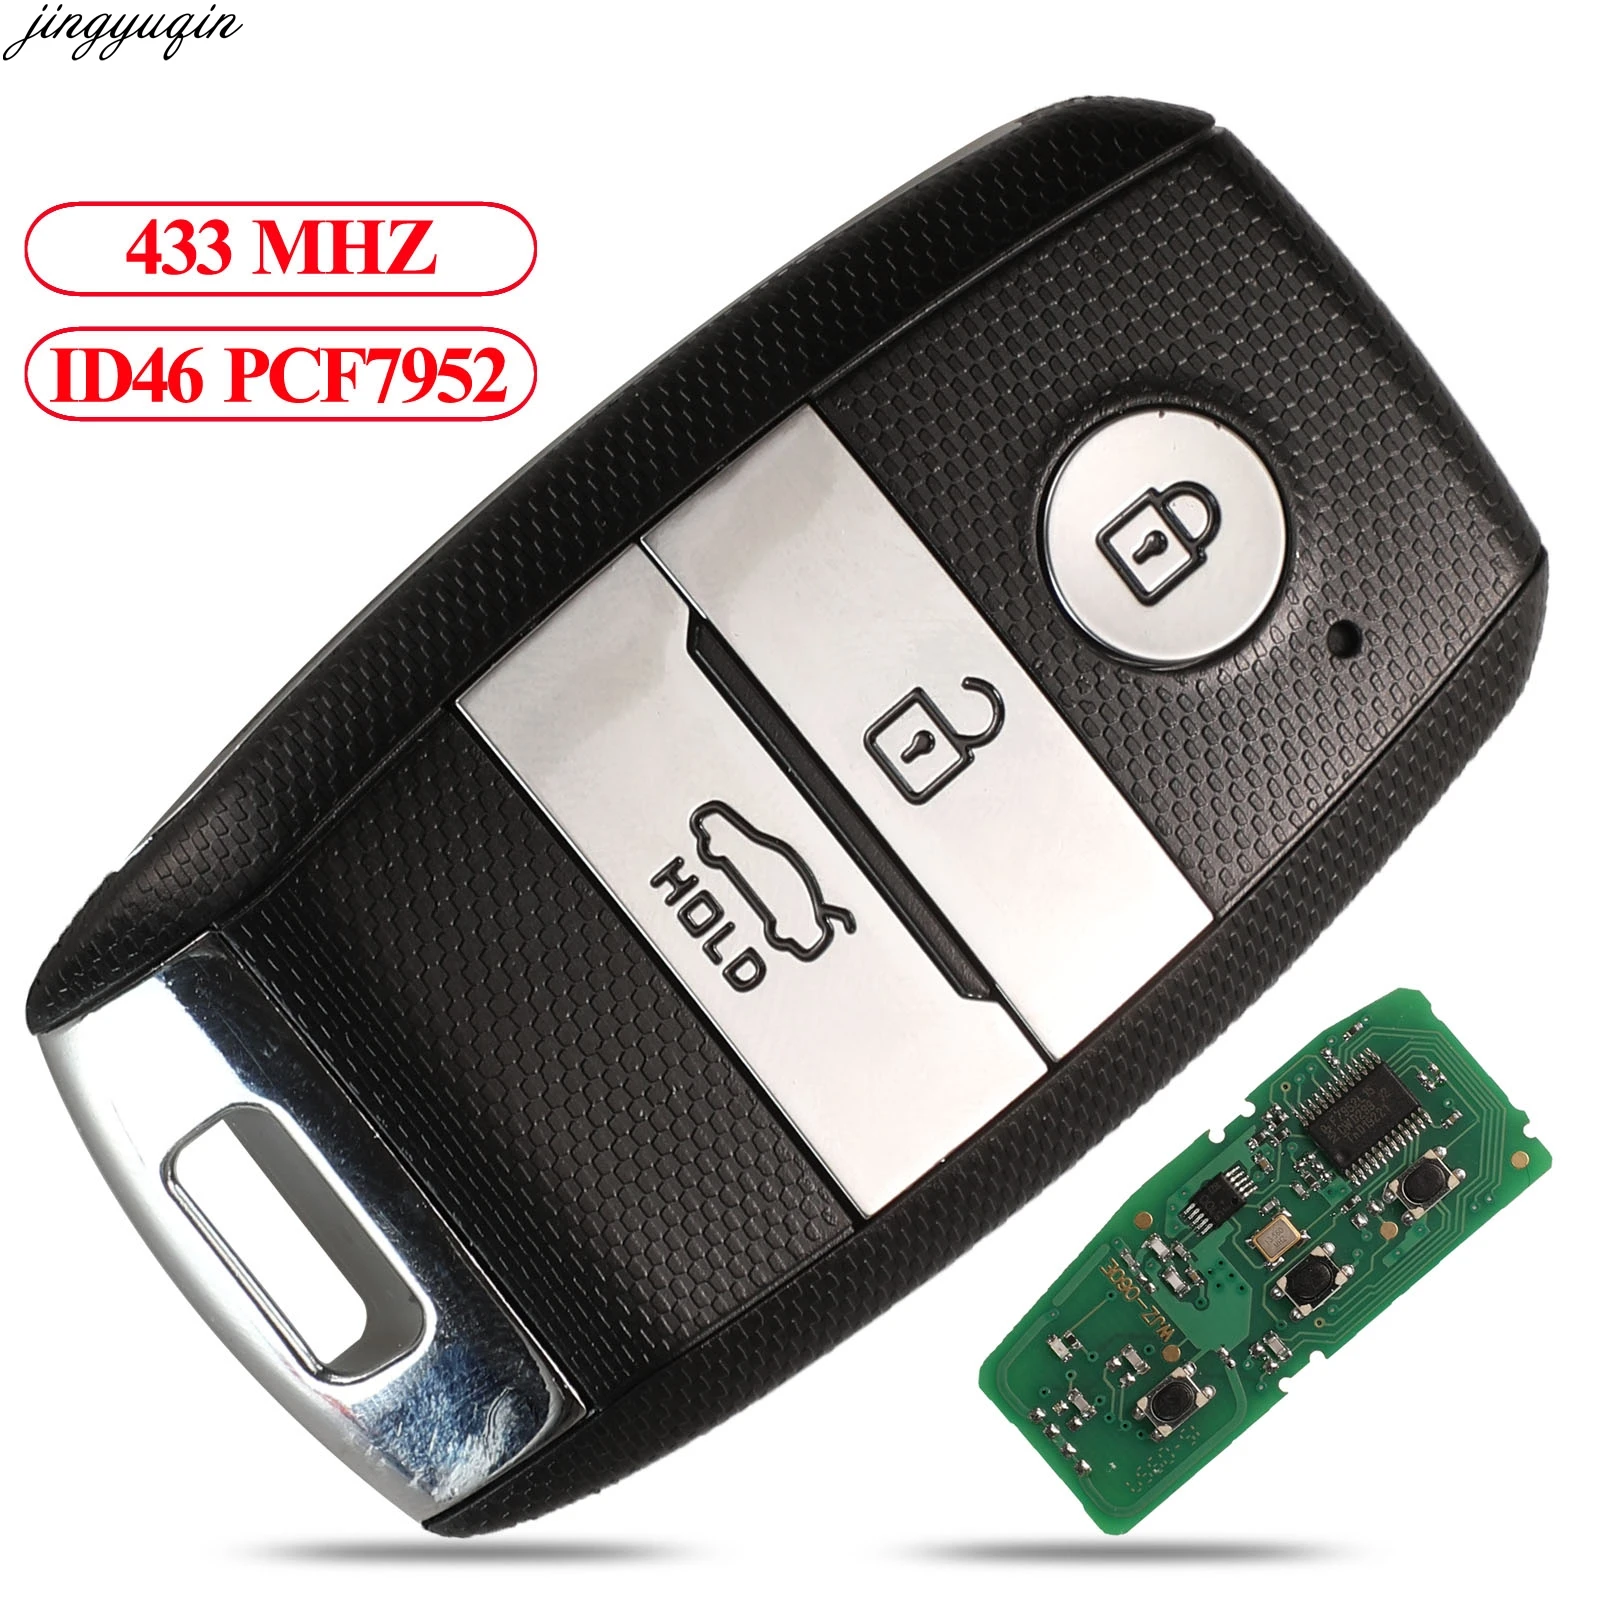 

Jingyuqin Remote Control Car Key 433Mhz ID46 Pcf7952 For KIA K5 KX3 Sportage Sorento P/N 95440-D9510 Keyless-Go Full Smart Fob